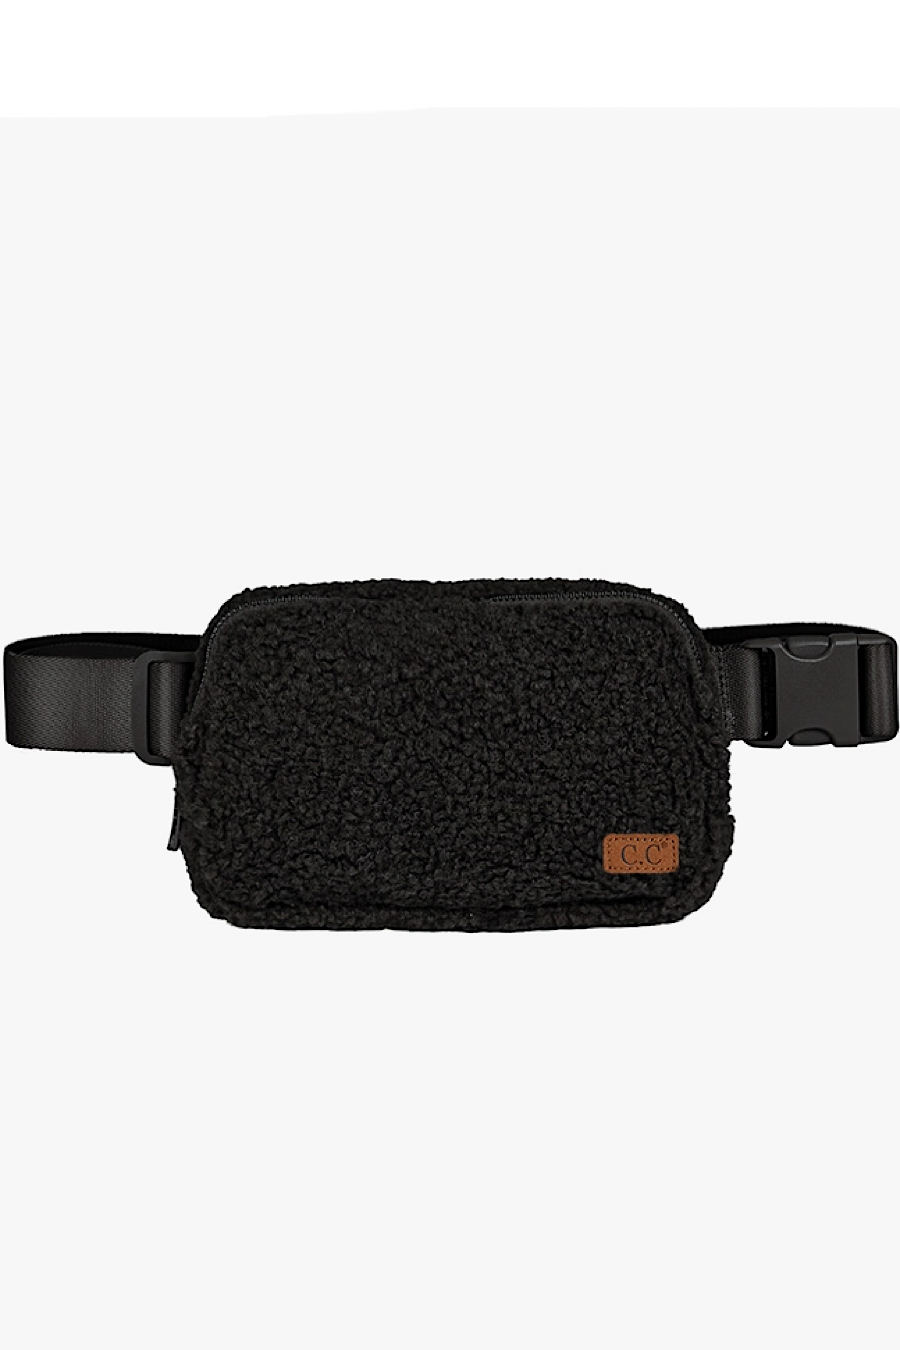 C.C. Sherpa Fannie Pack Belt Bag in Taupe, Grey or Black